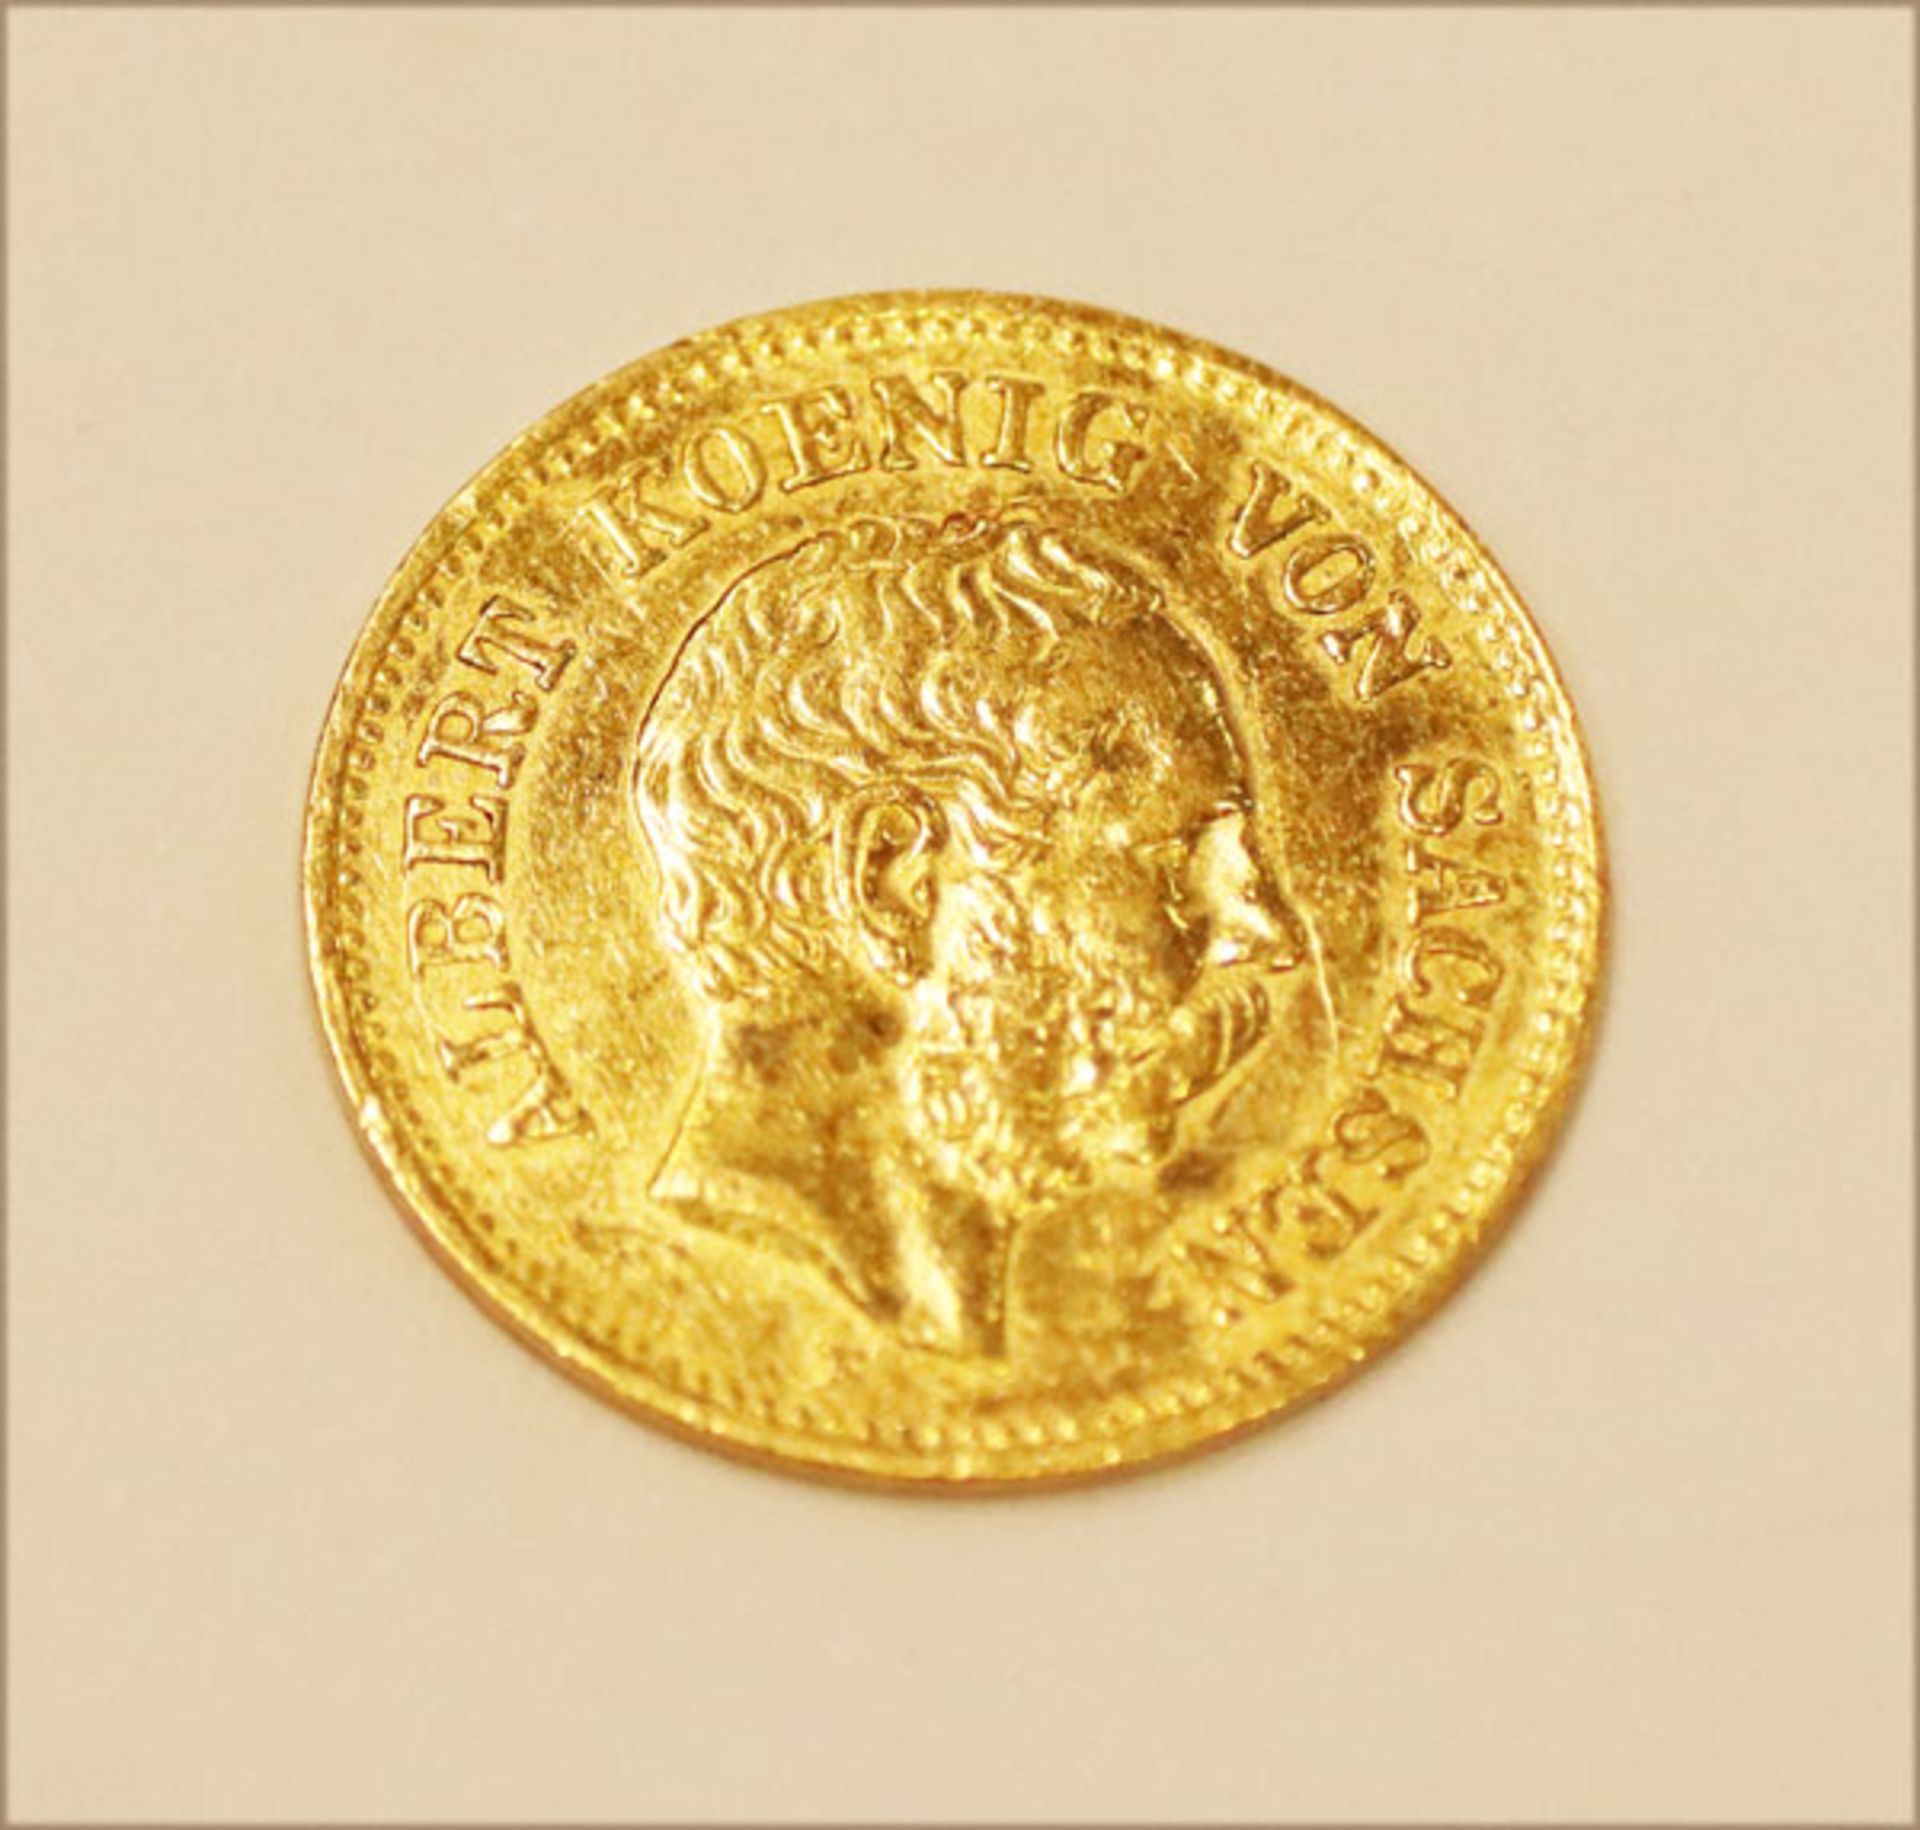 Goldmünze 5 Reichsmark Sachsen 1877, leicht poliert, ss+